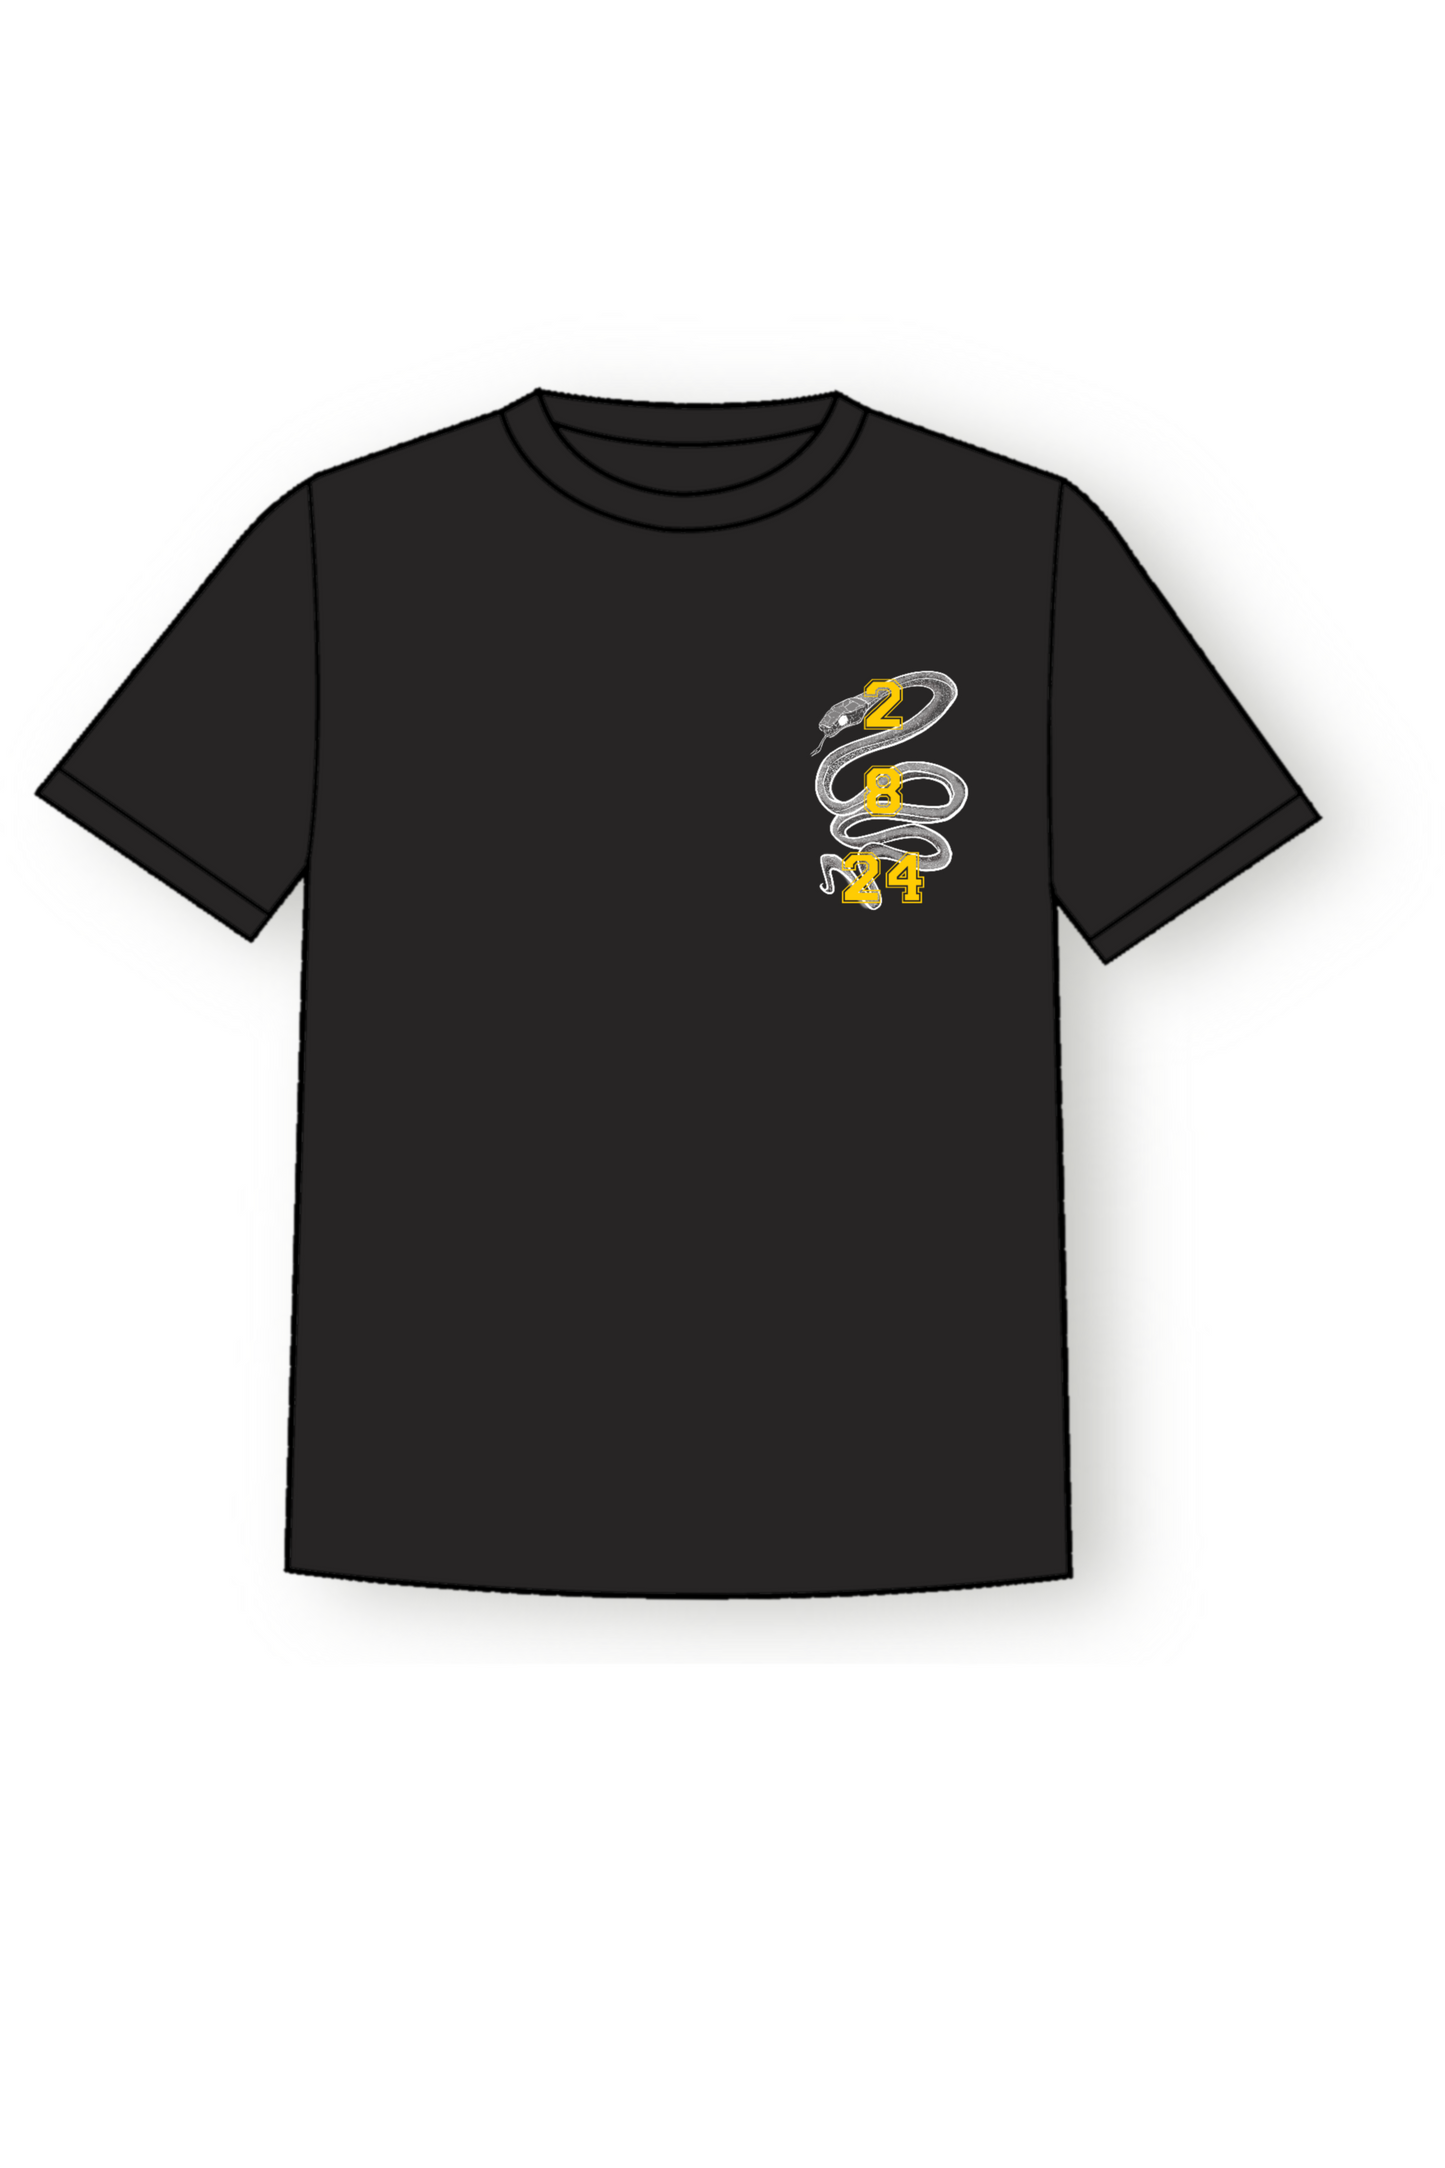 The Black Mamba T-shirt - Lakers Yellow